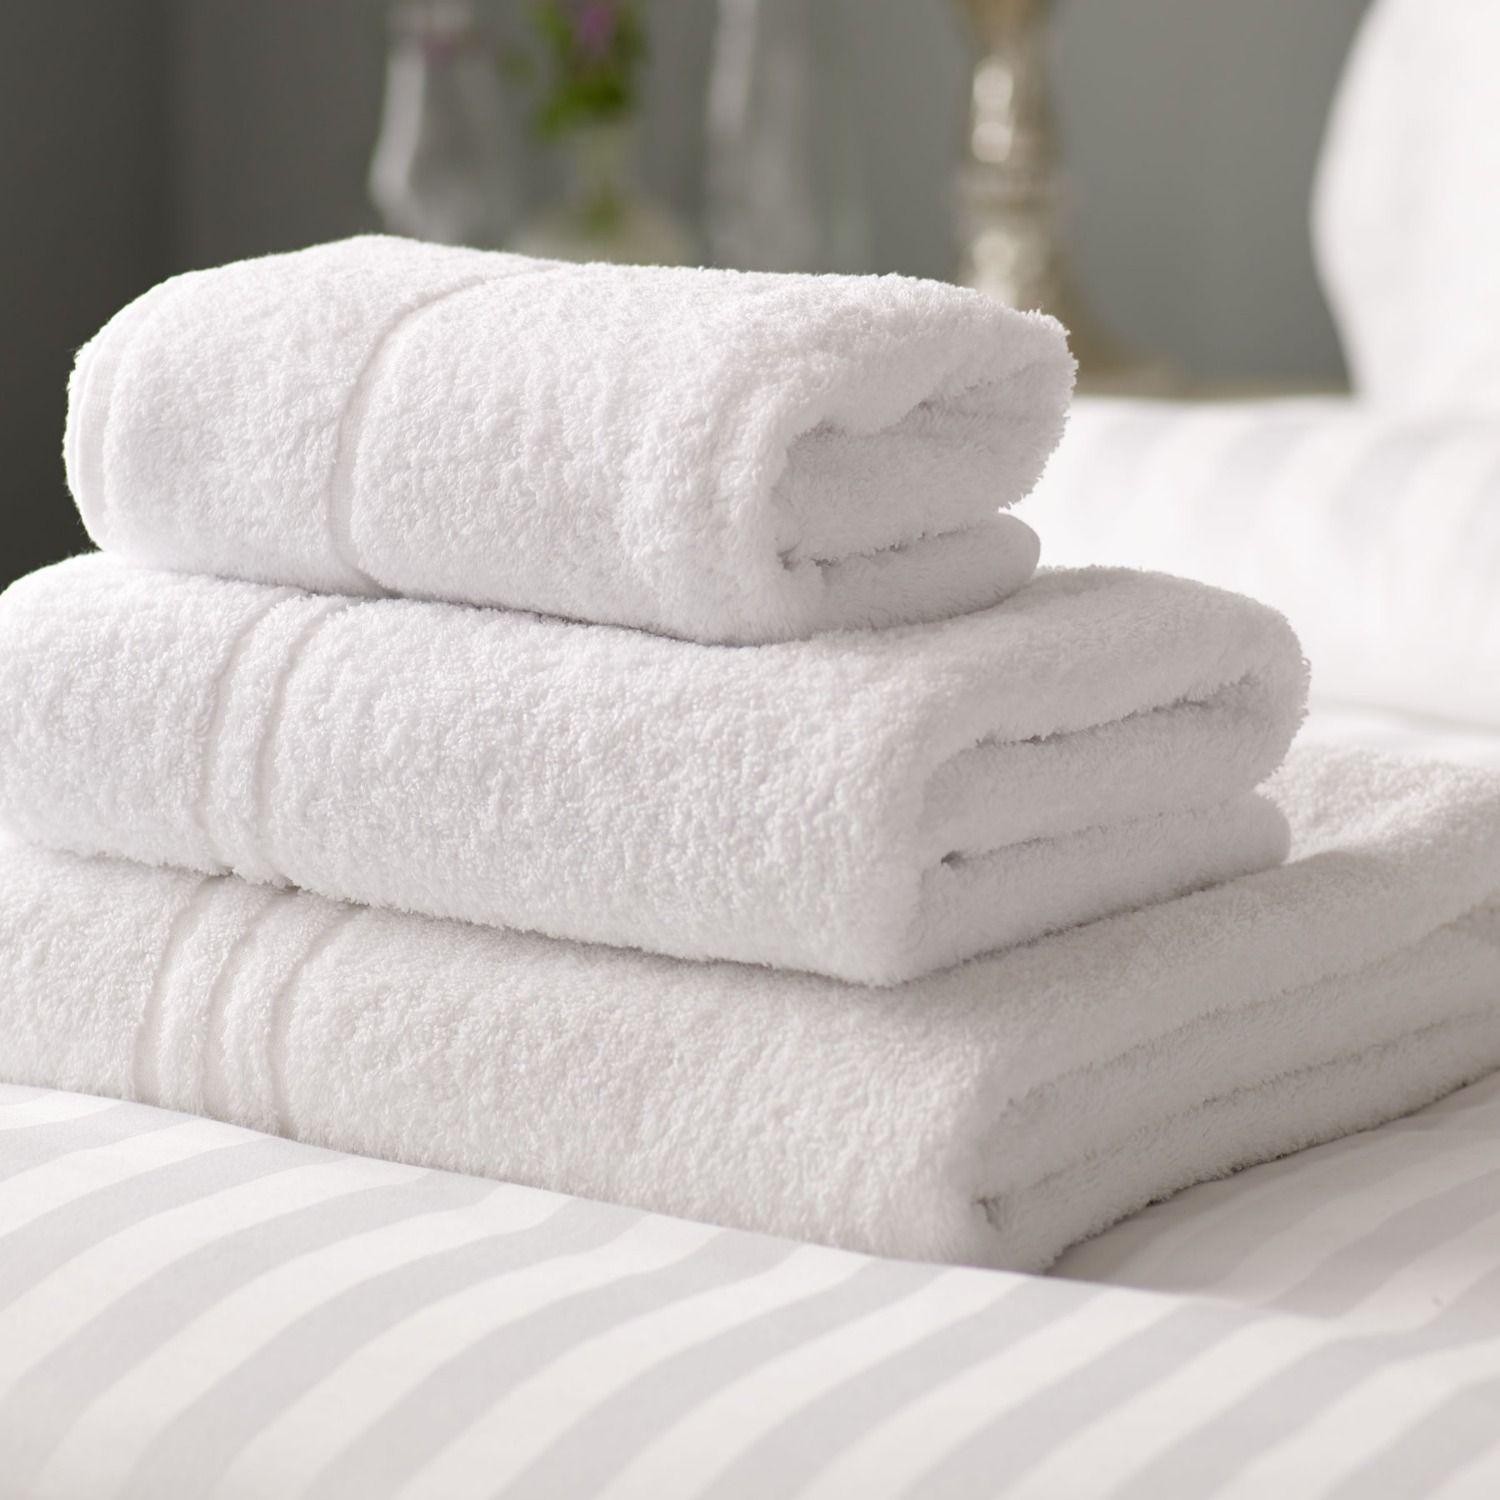 SET OF 6 NEW WHITE HOSPITALITY 100% COTTON THICK HOTEL QUALITY BATH TOWEL